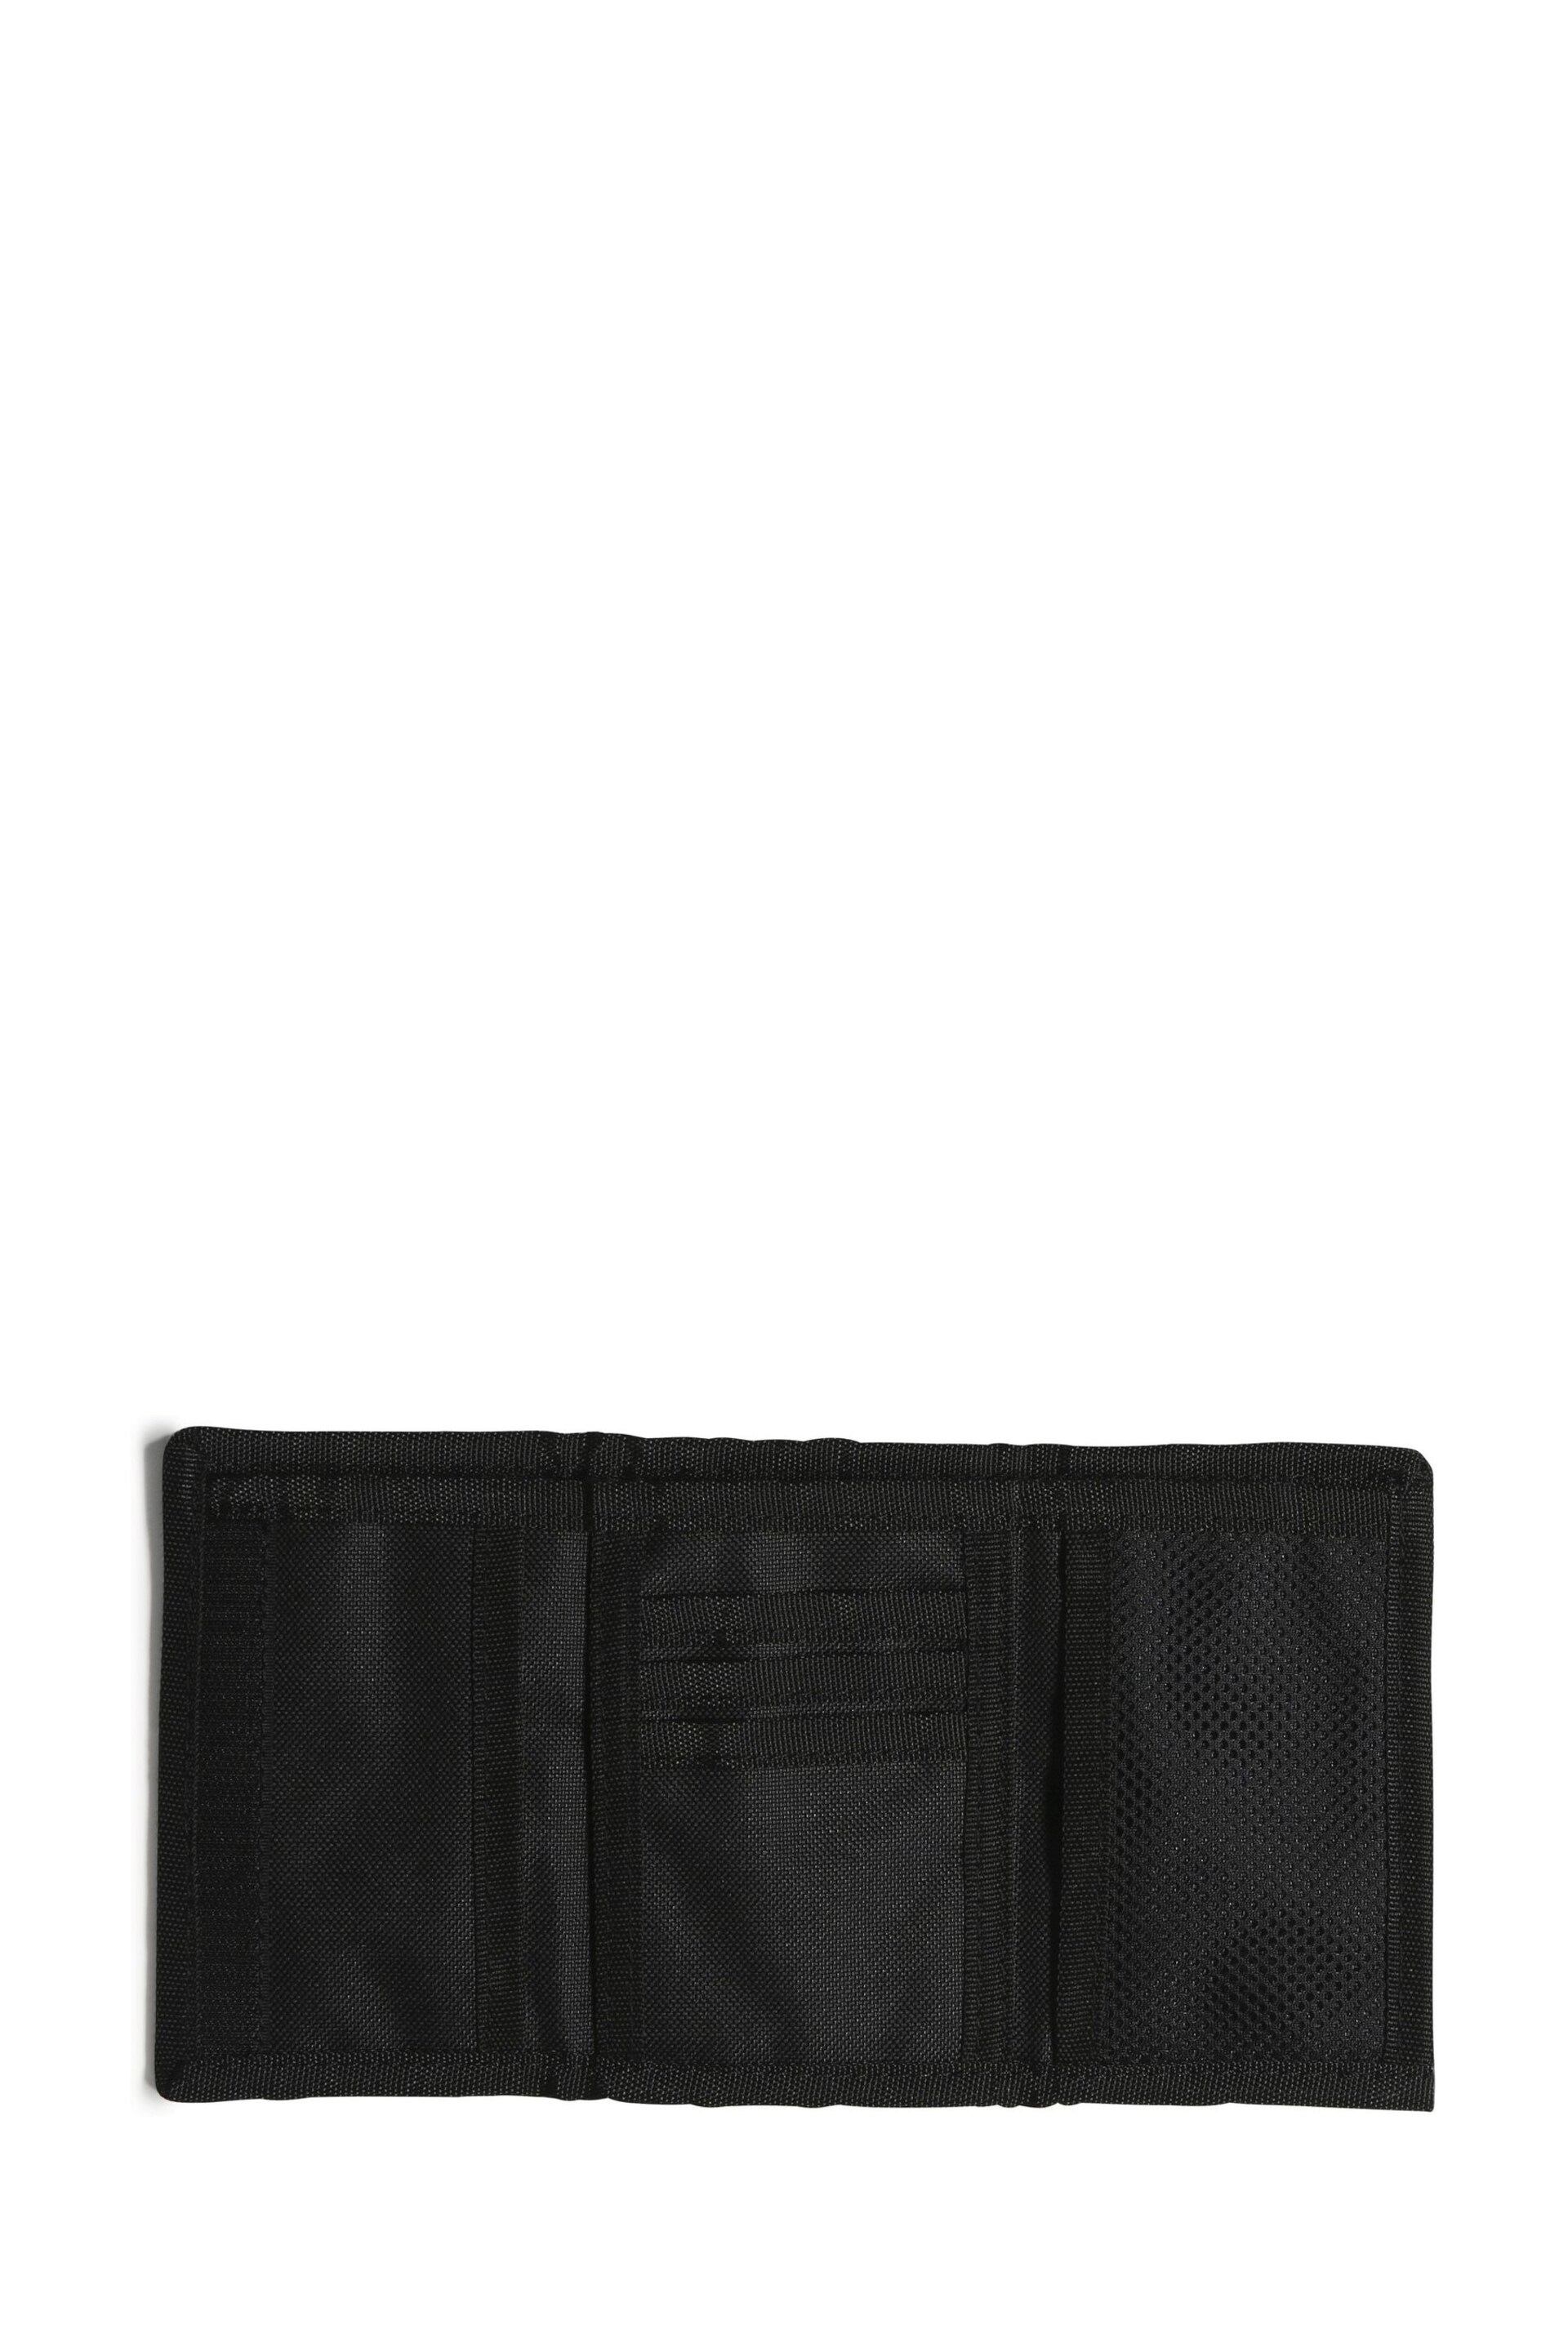 adidas Black Essentials Wallet - Image 3 of 5